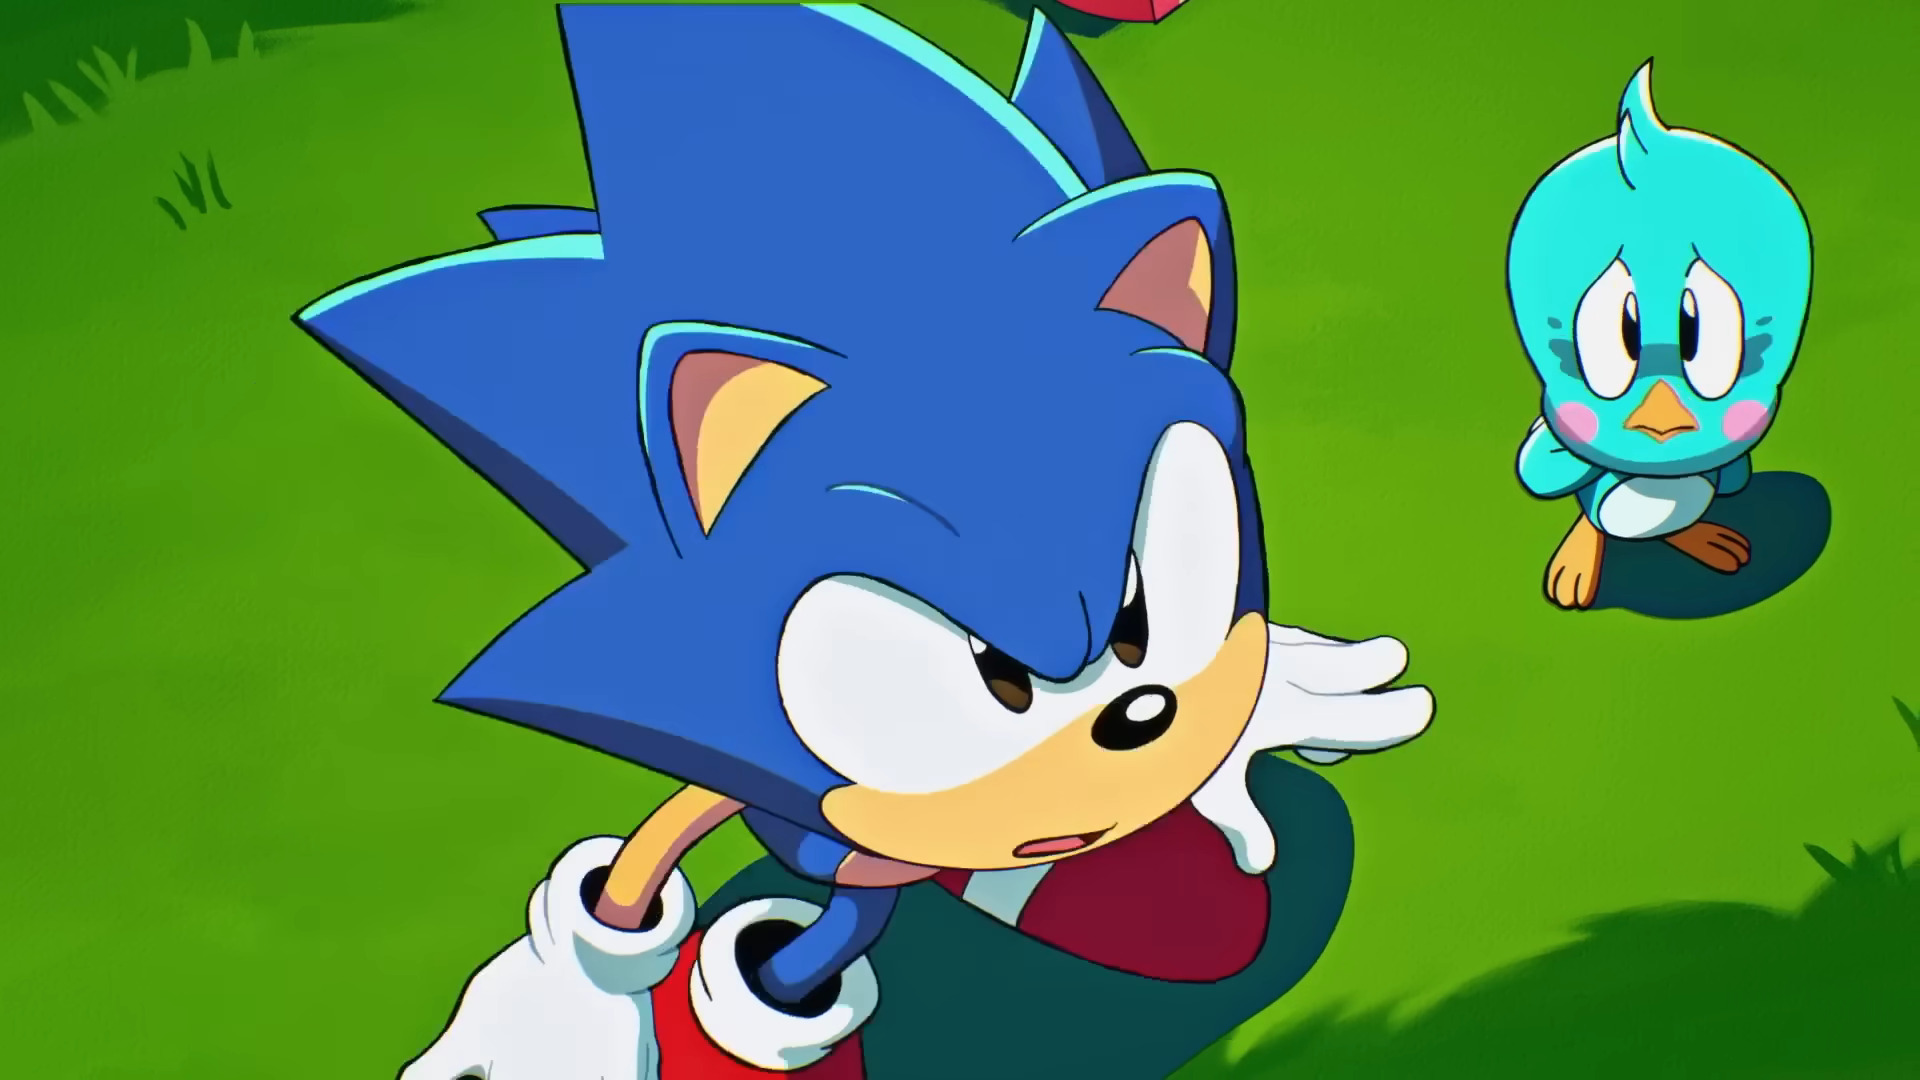 SEGA Confirms Knuckles Not Playable in Sonic Origins Sonic CD Port – SoaH  City